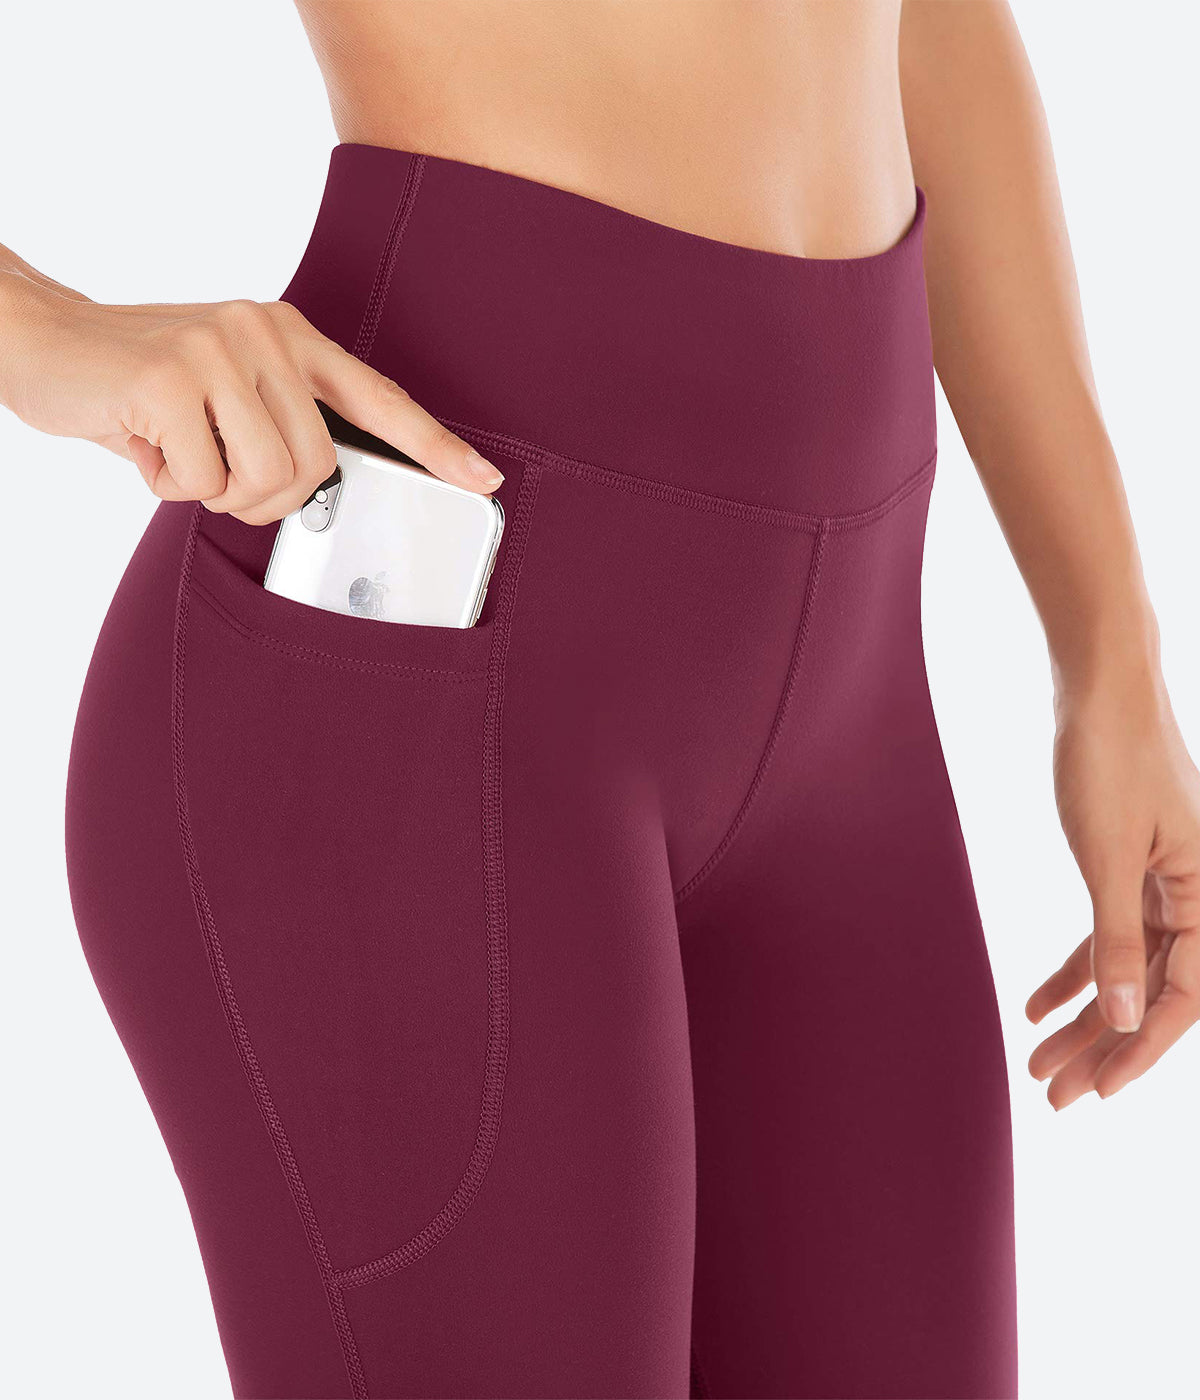 kpoplk Boot Cut Yoga Pants Women,Leggings with Pockets for Women, High  Waisted Tummy Control Workout Yoga Pants(Black,3XL) 